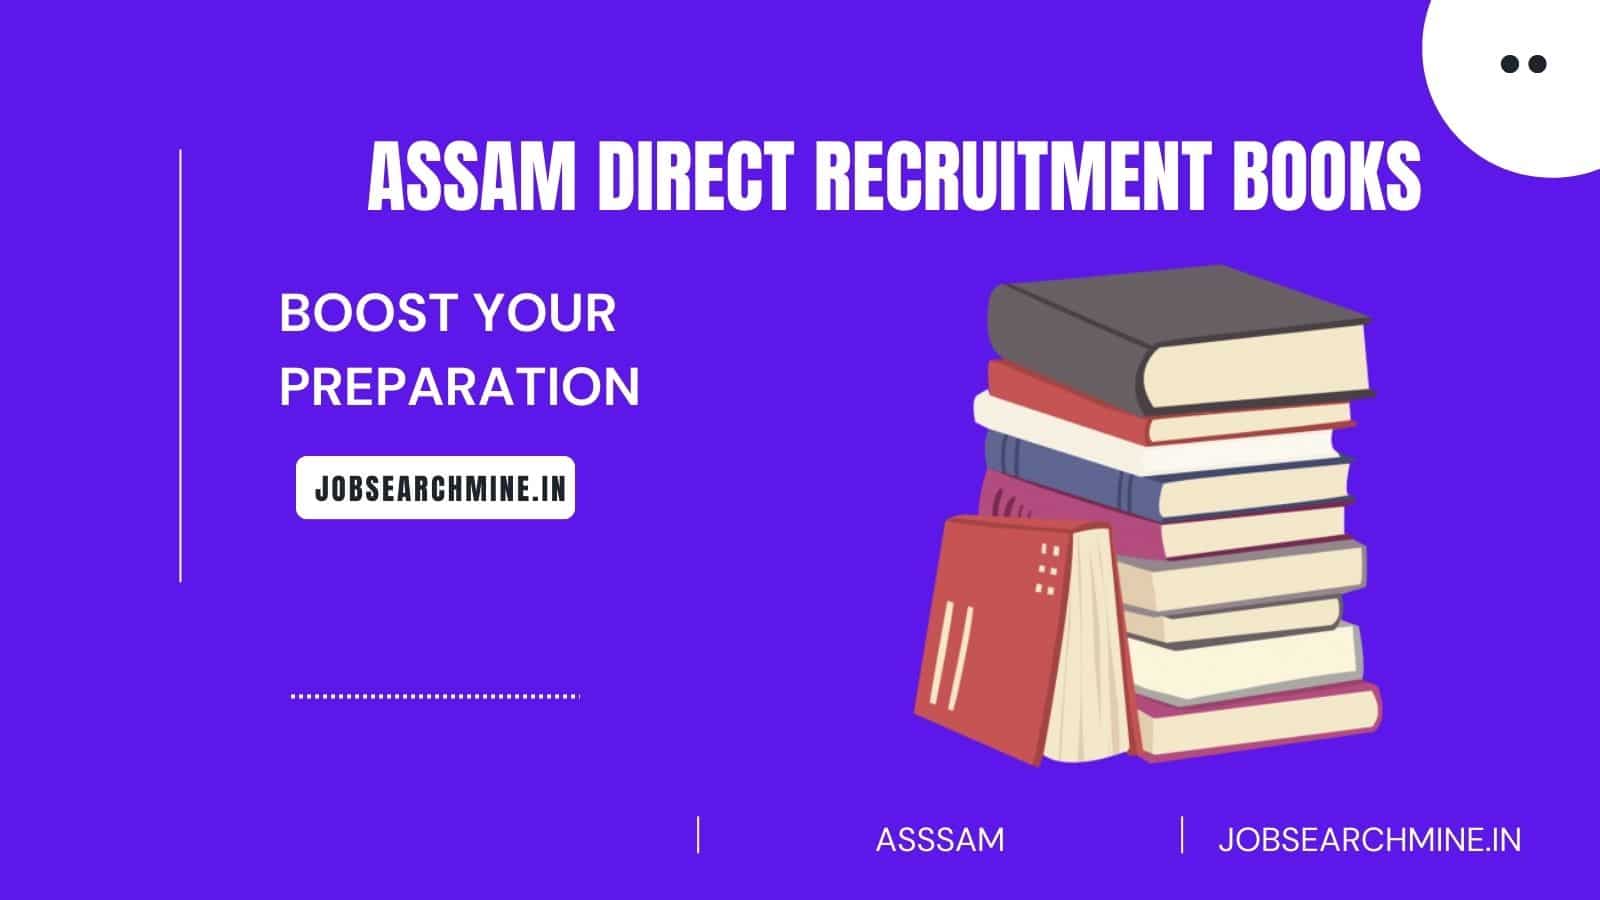 books for Assam direct recruitment